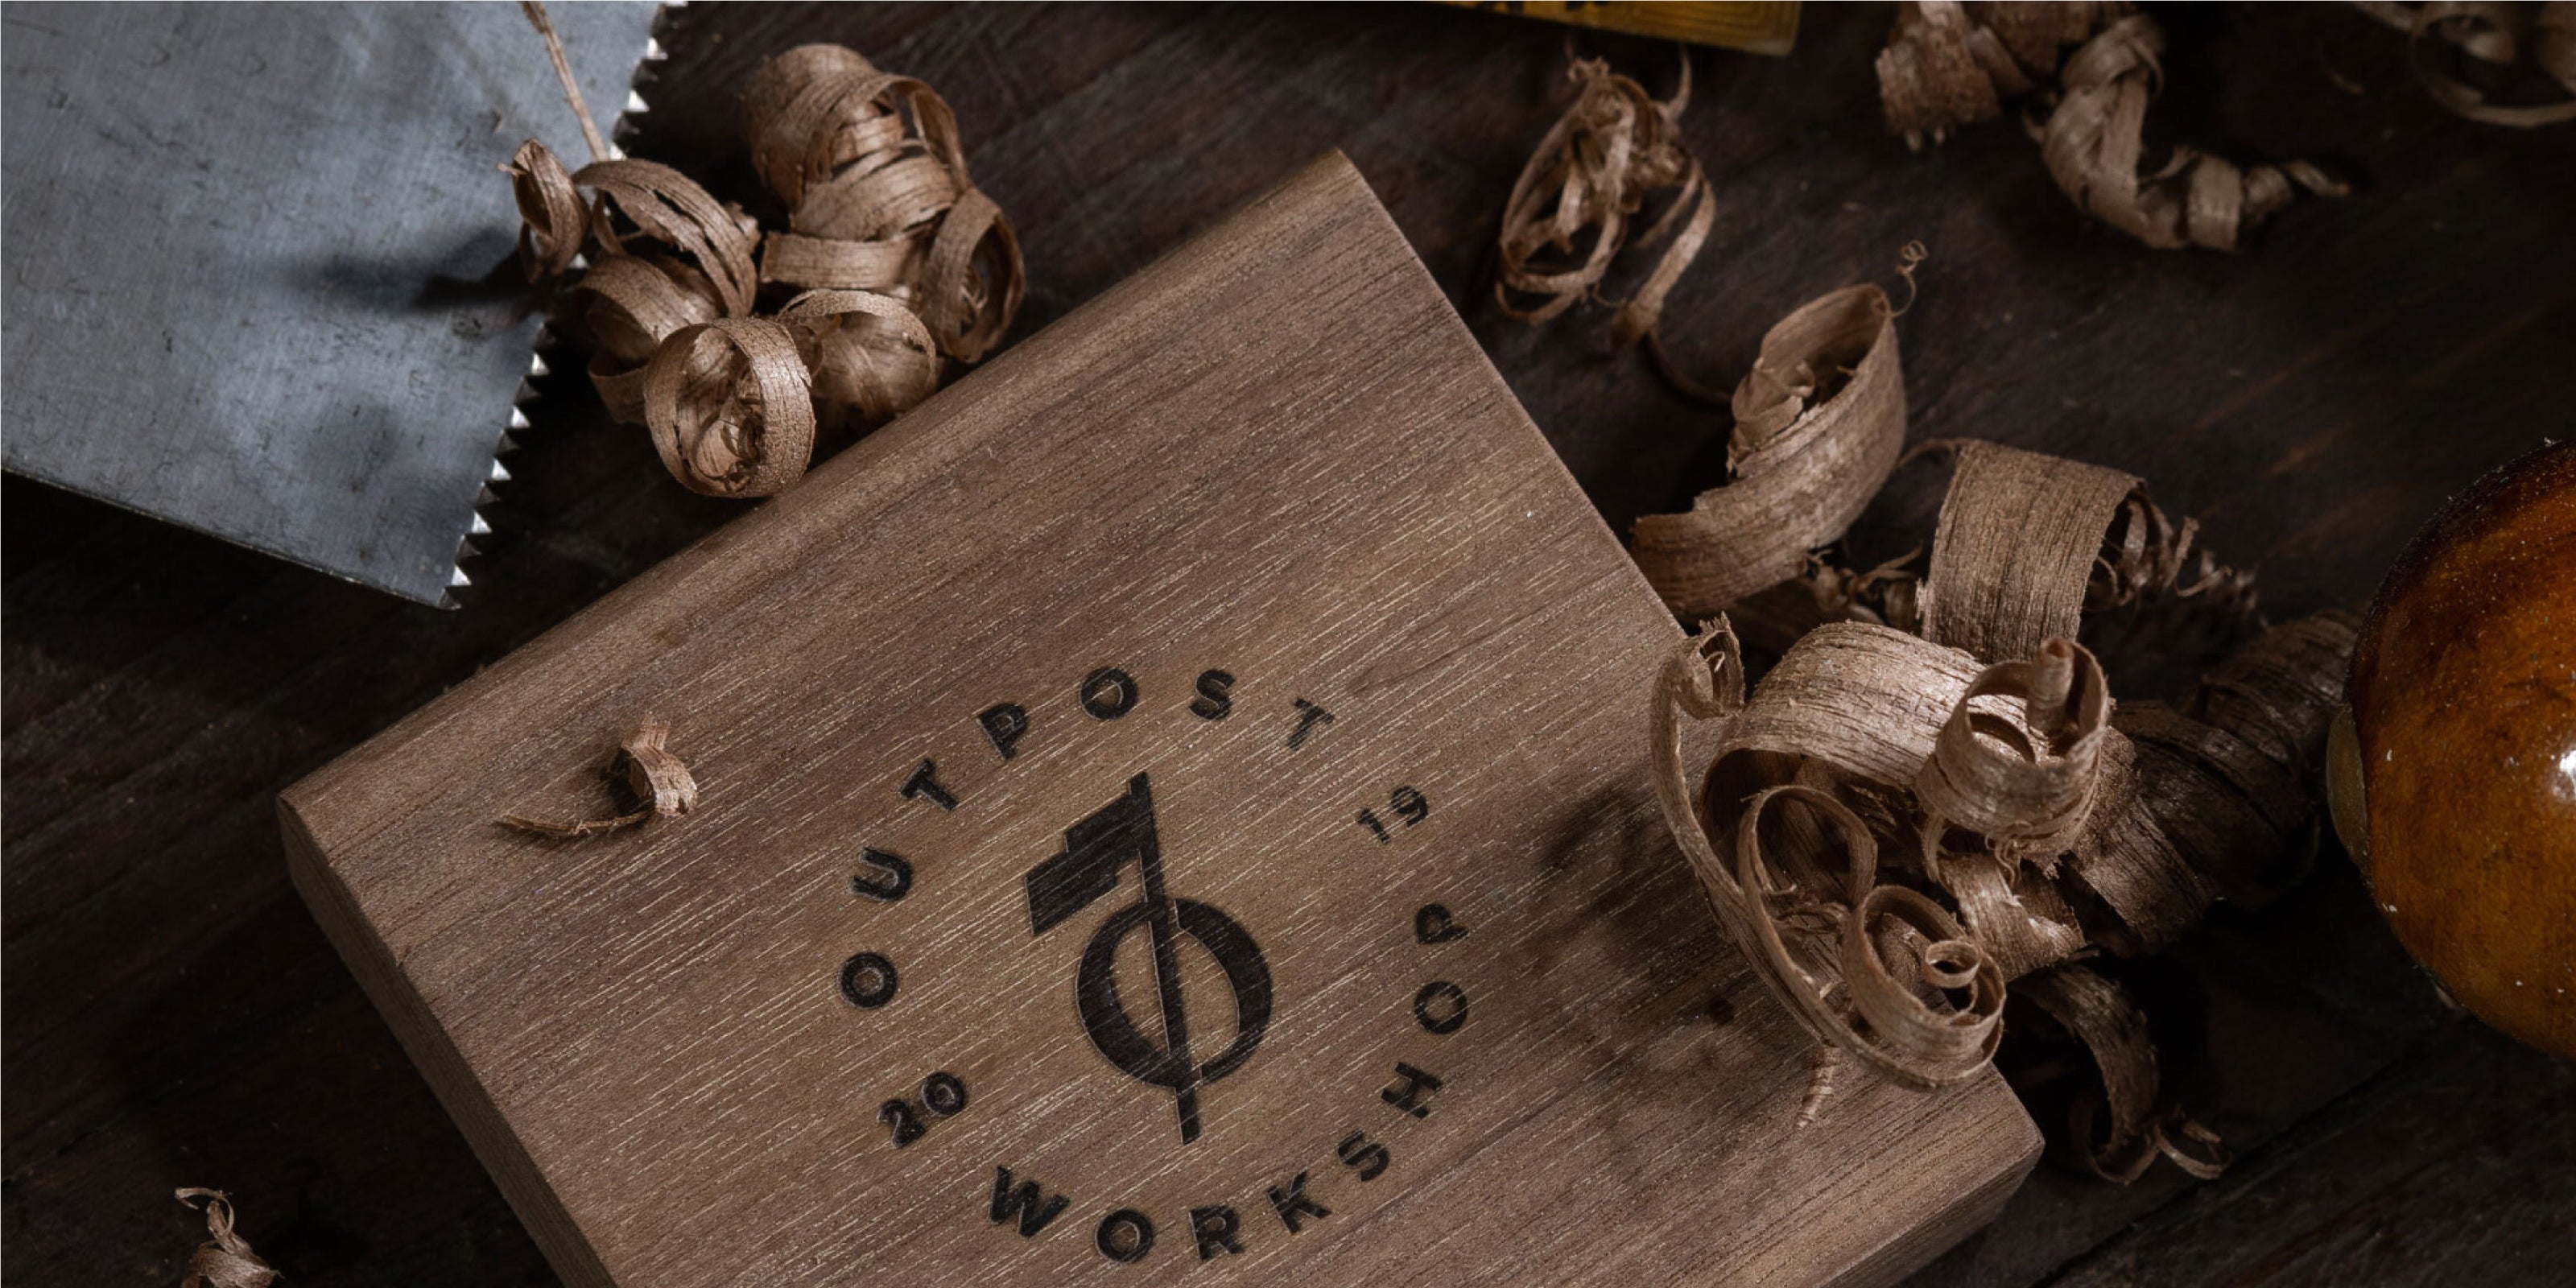 Outpost Workshop Logo Branded into Wood